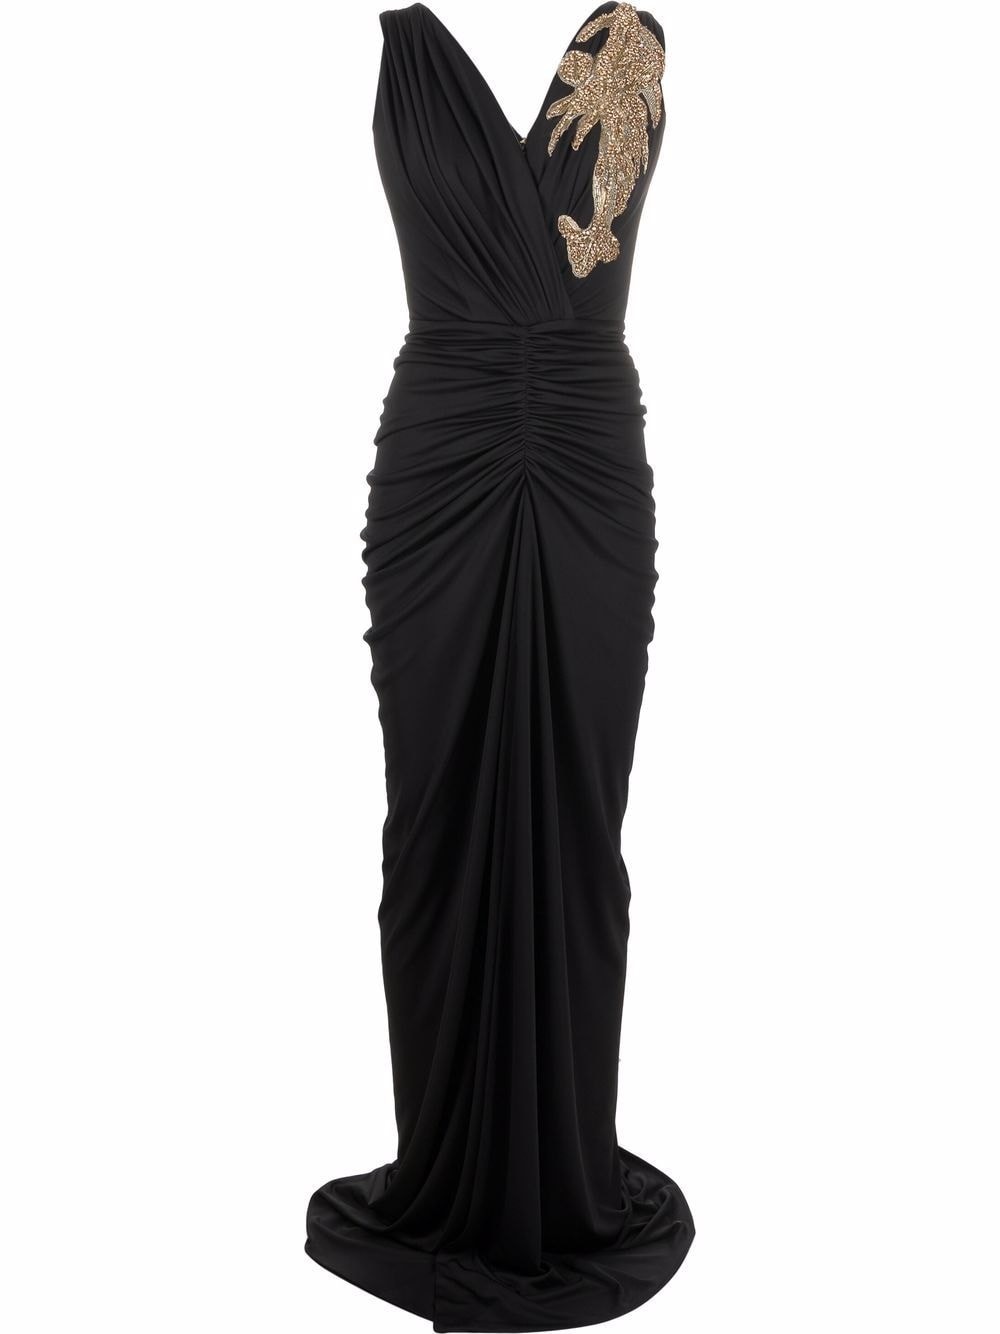 Rhea Costa Gem-Embellished Ruched Maxi Dress 2122021DLG Black